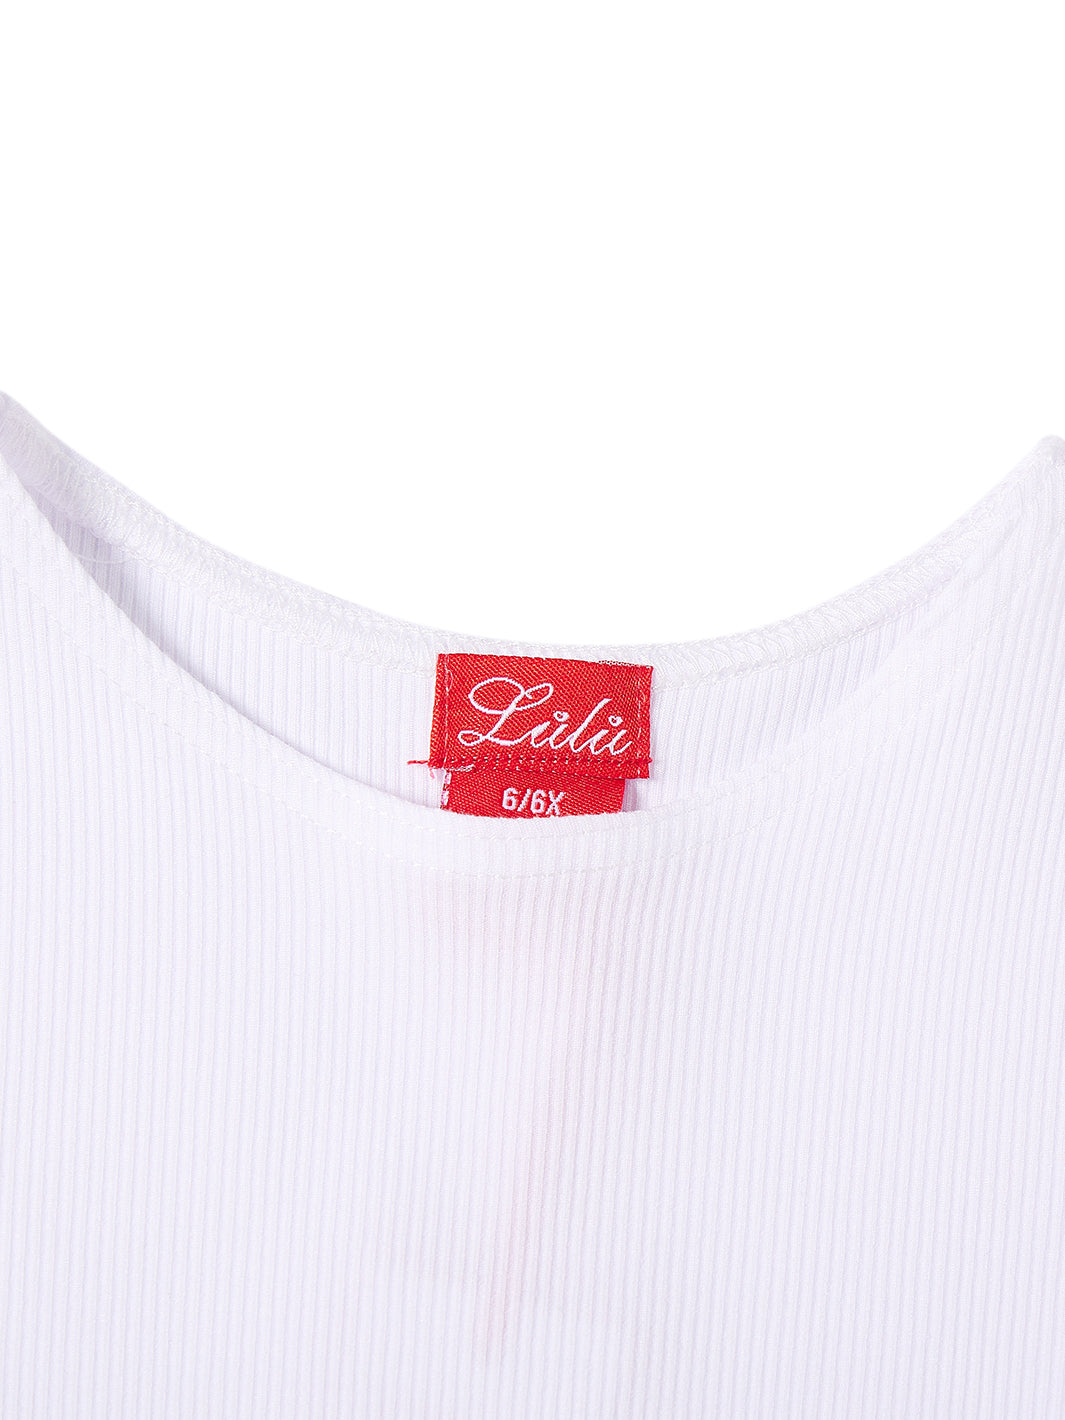 Basic Long Sleeve T-shirt - White